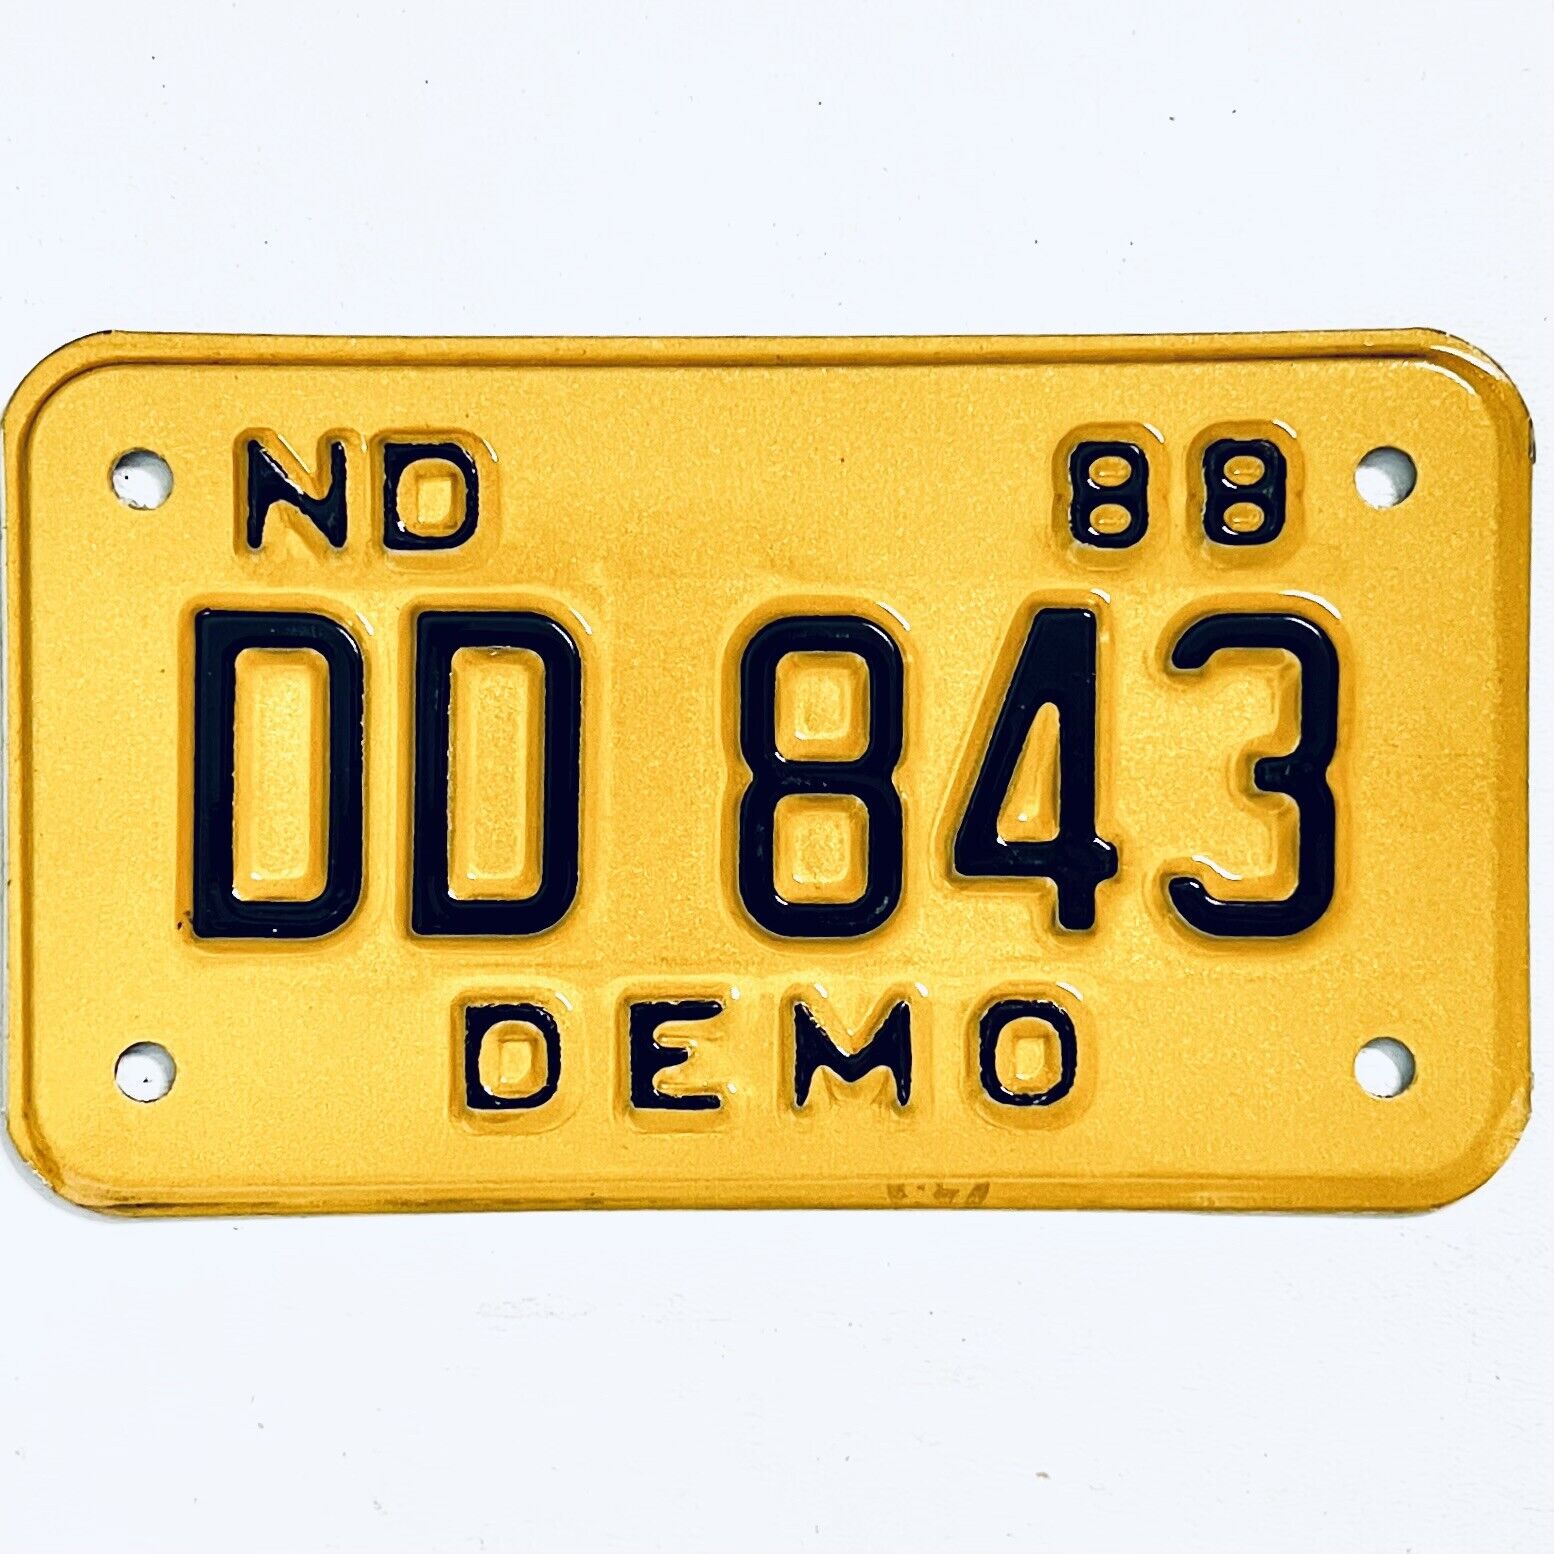 1988 United States North Dakota Demo Special License Plate Dd 843